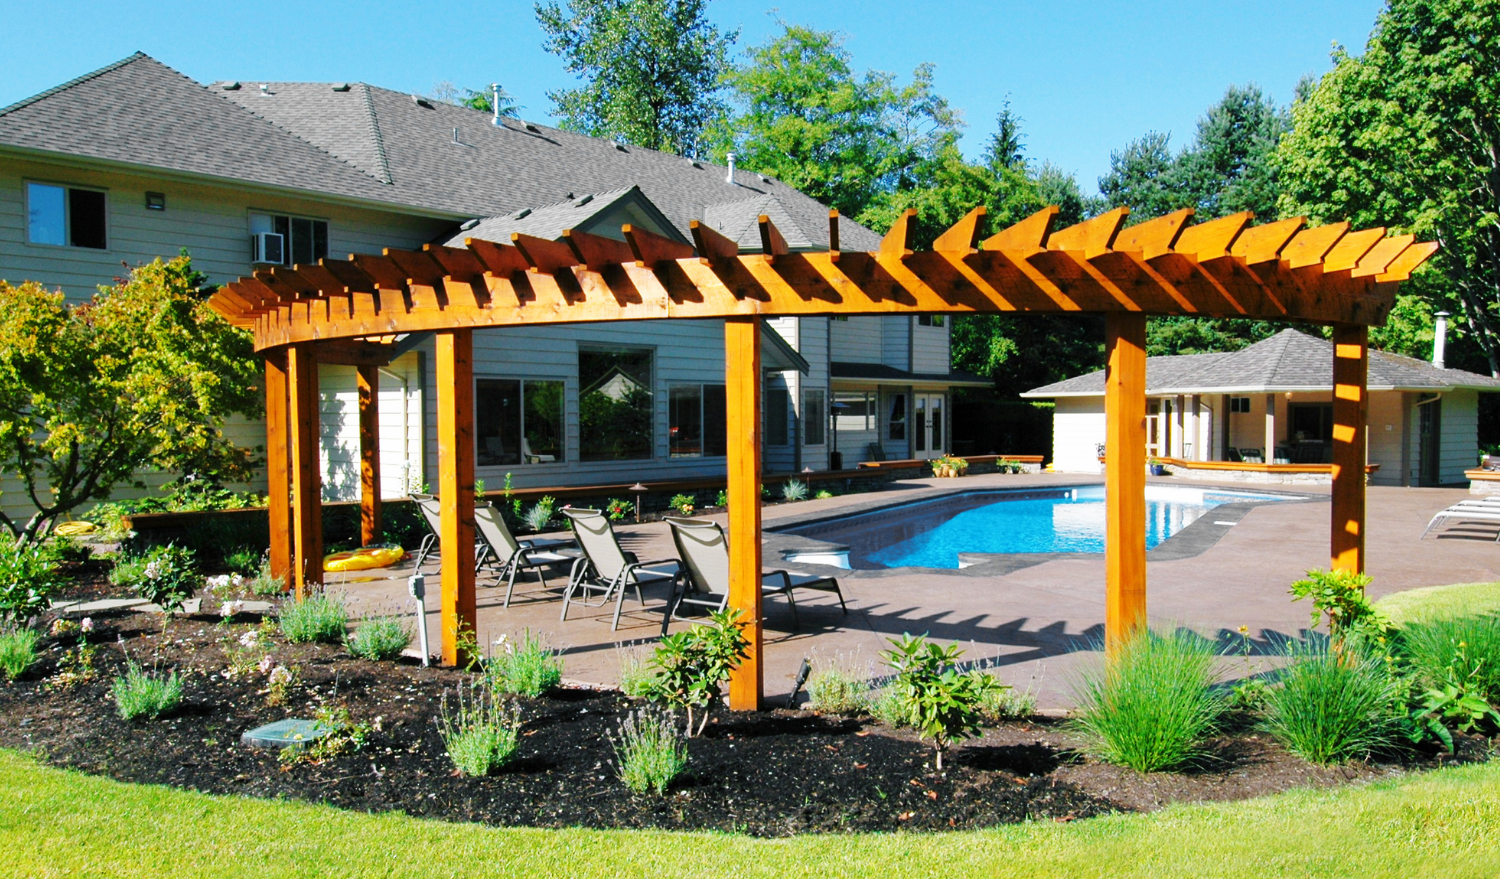 Backyard design with custom pool, patio and hardscape design and lovely wood pergola.